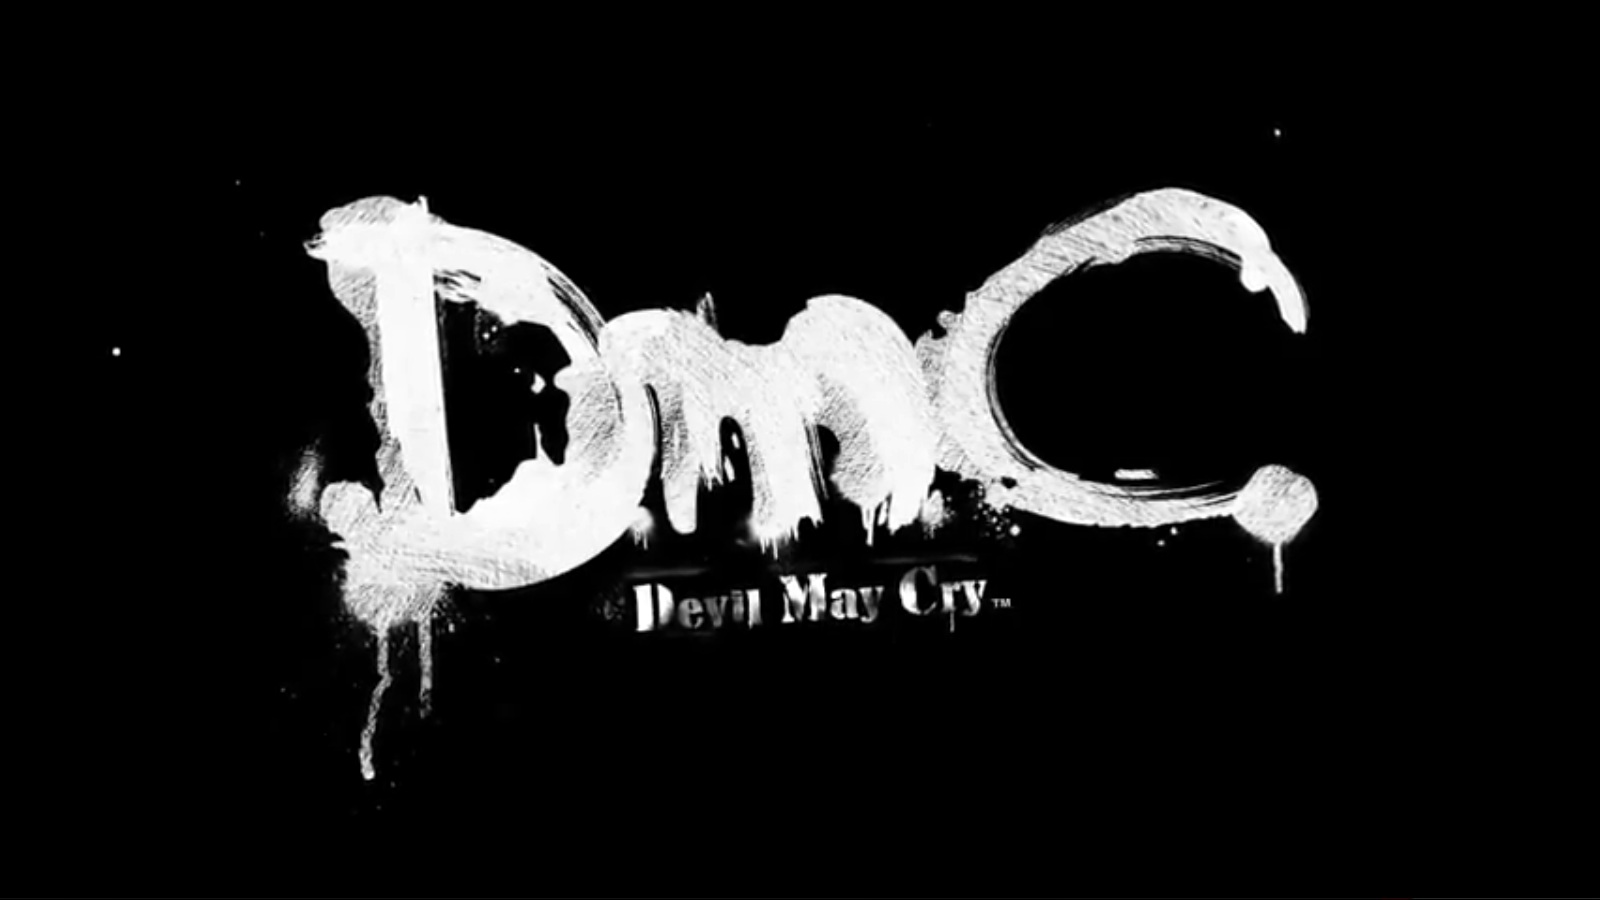 DmC Devil May Cry